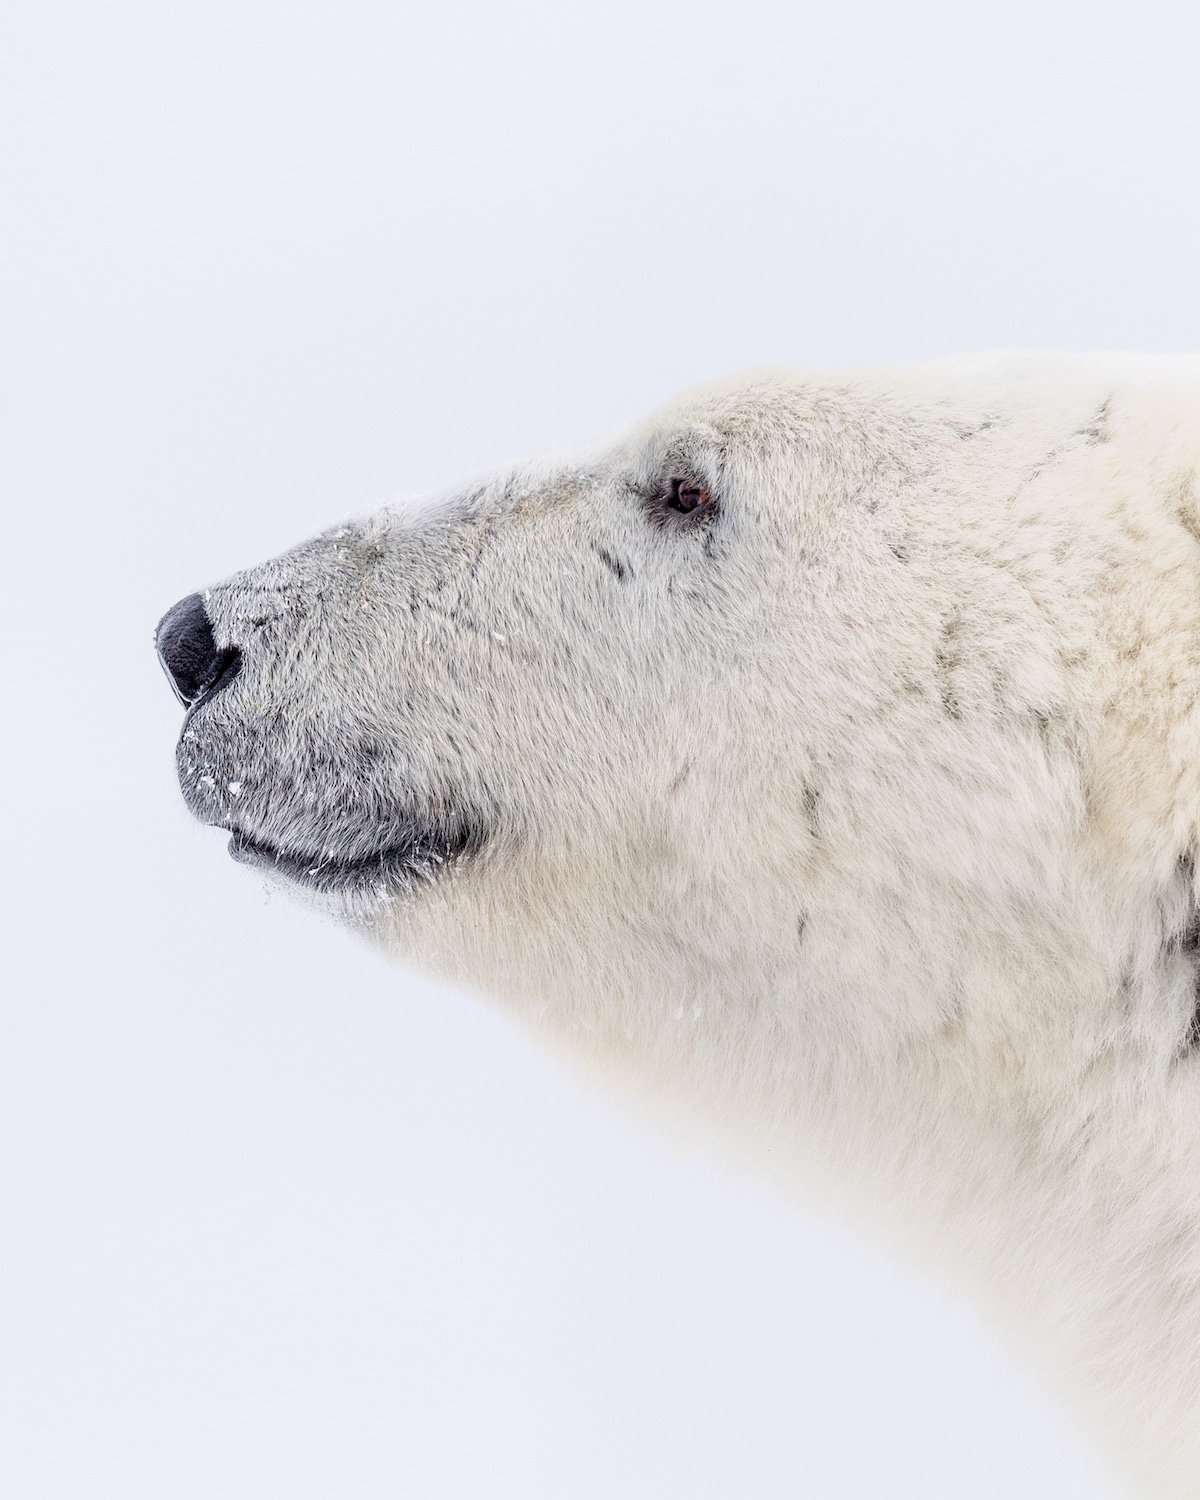 Hudson Bay Polar Bears by George Turner